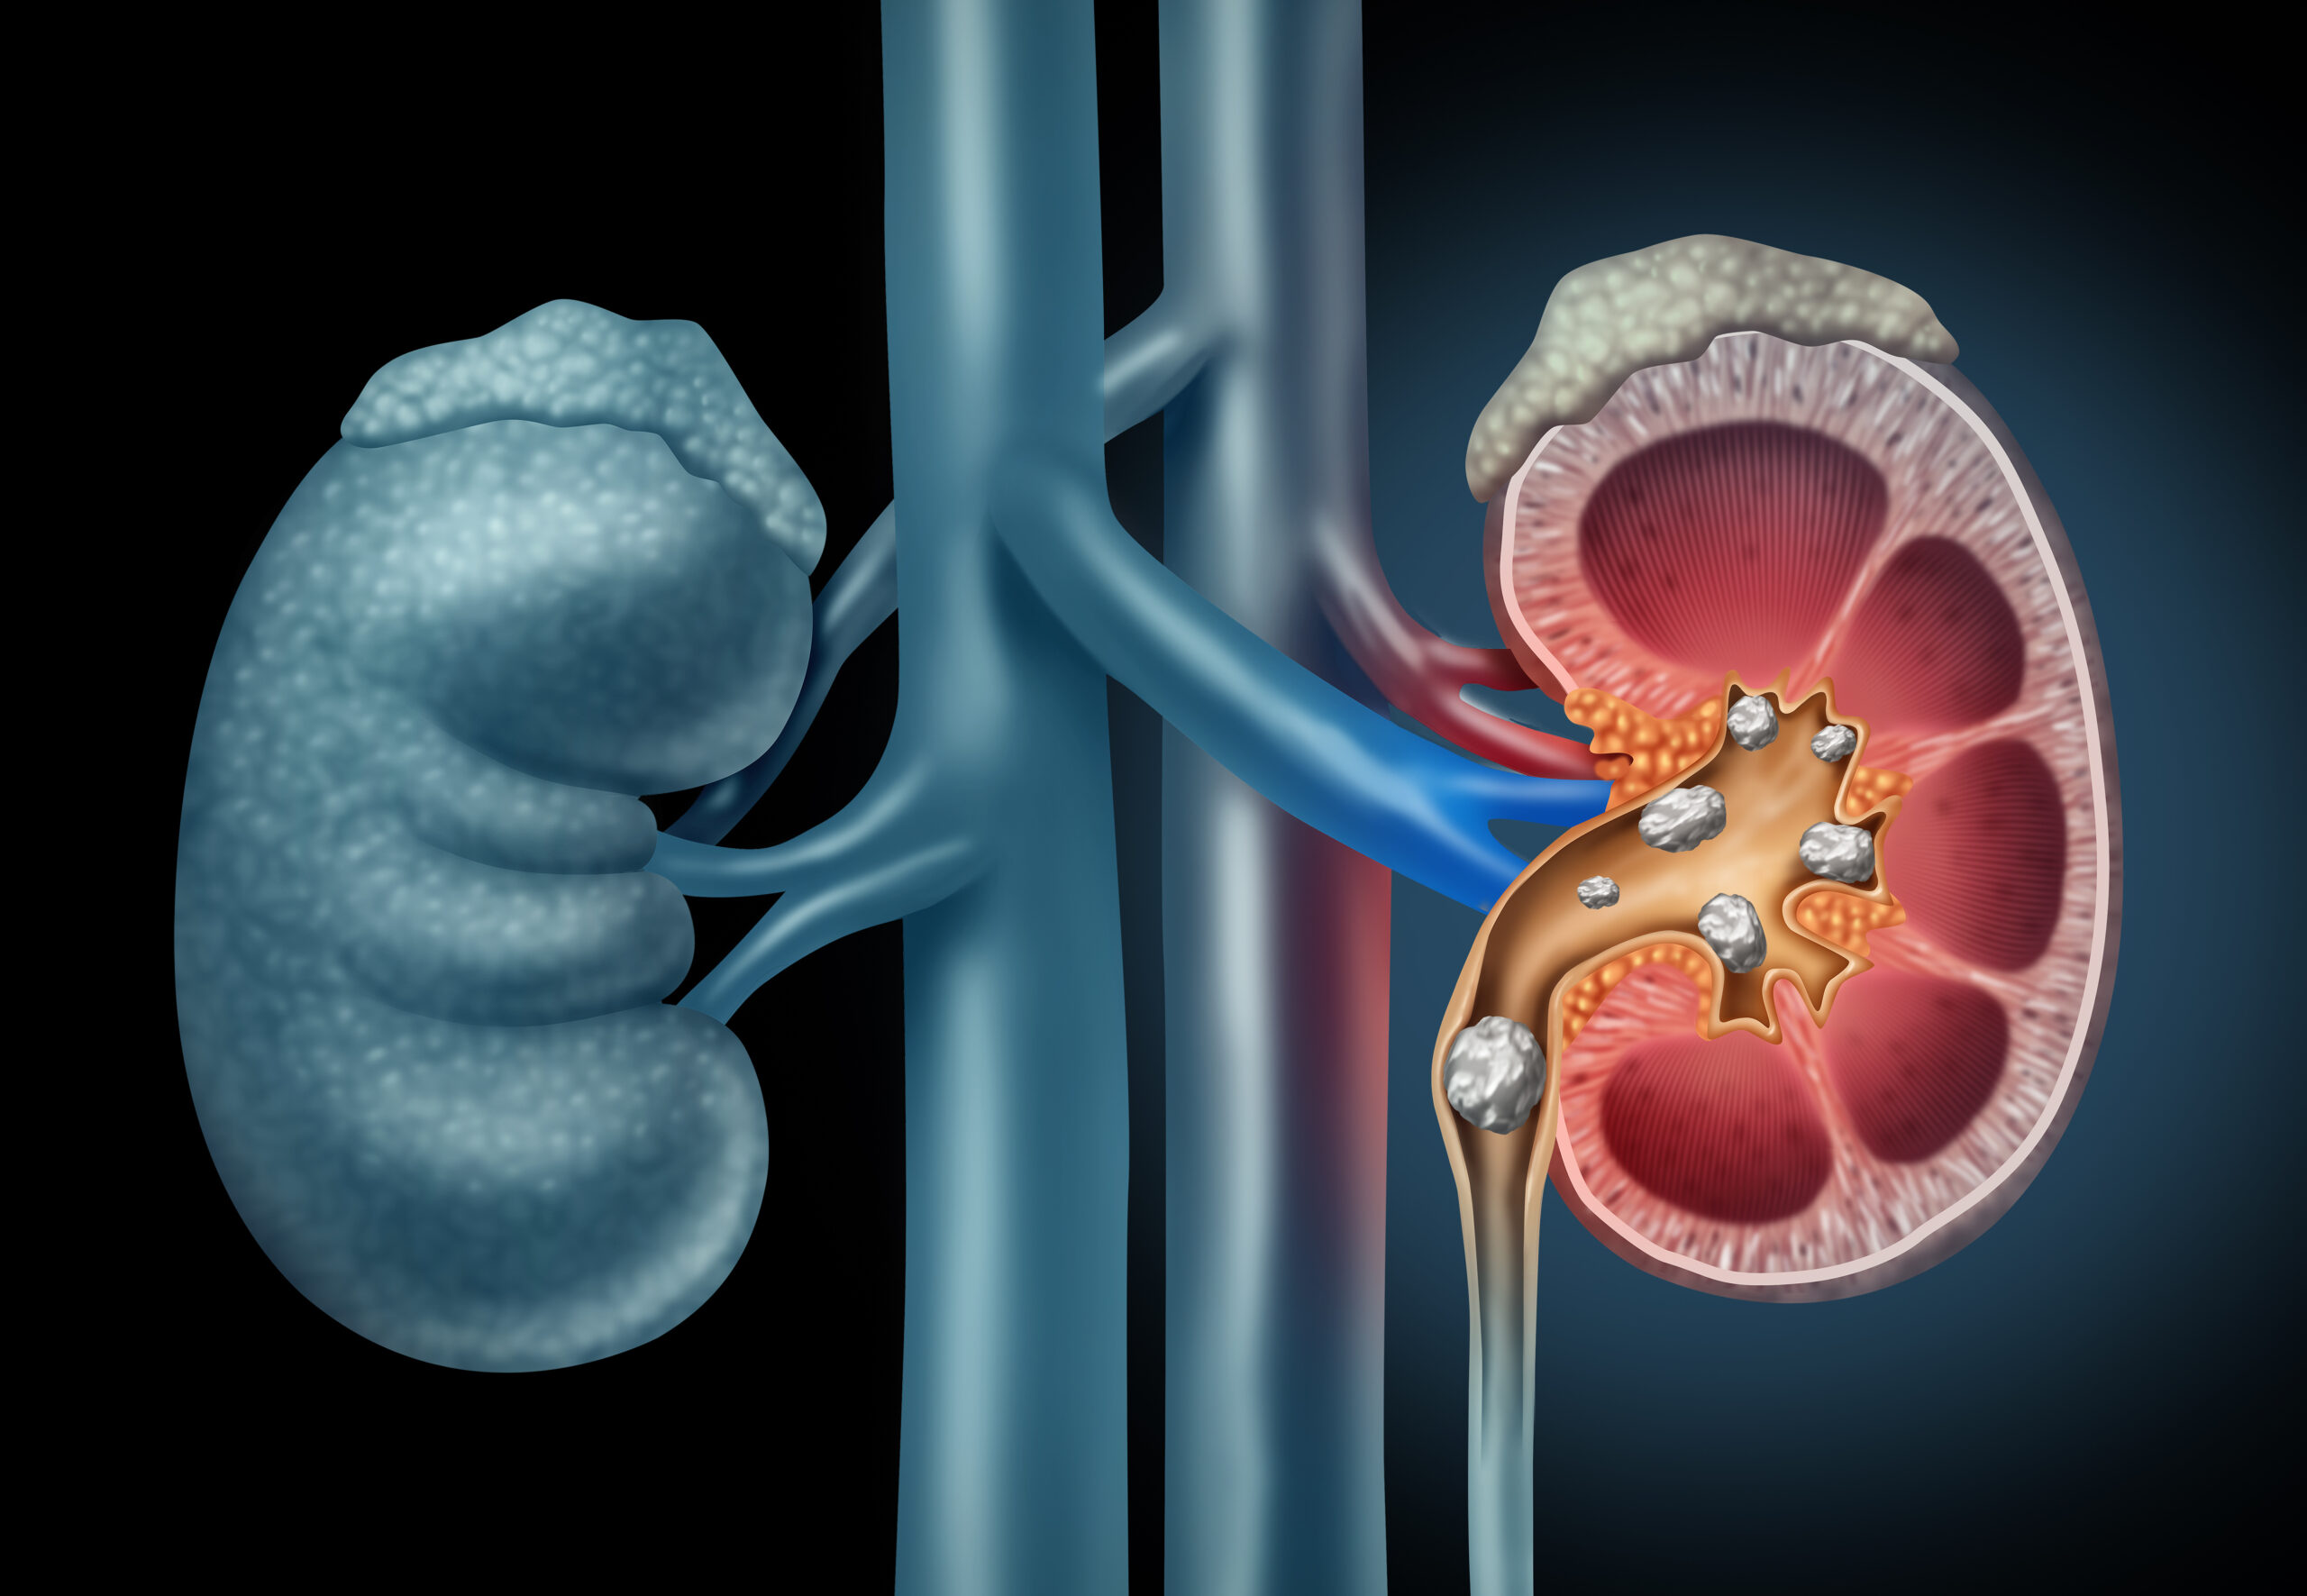 GHuman kidney Stones Medical Concept